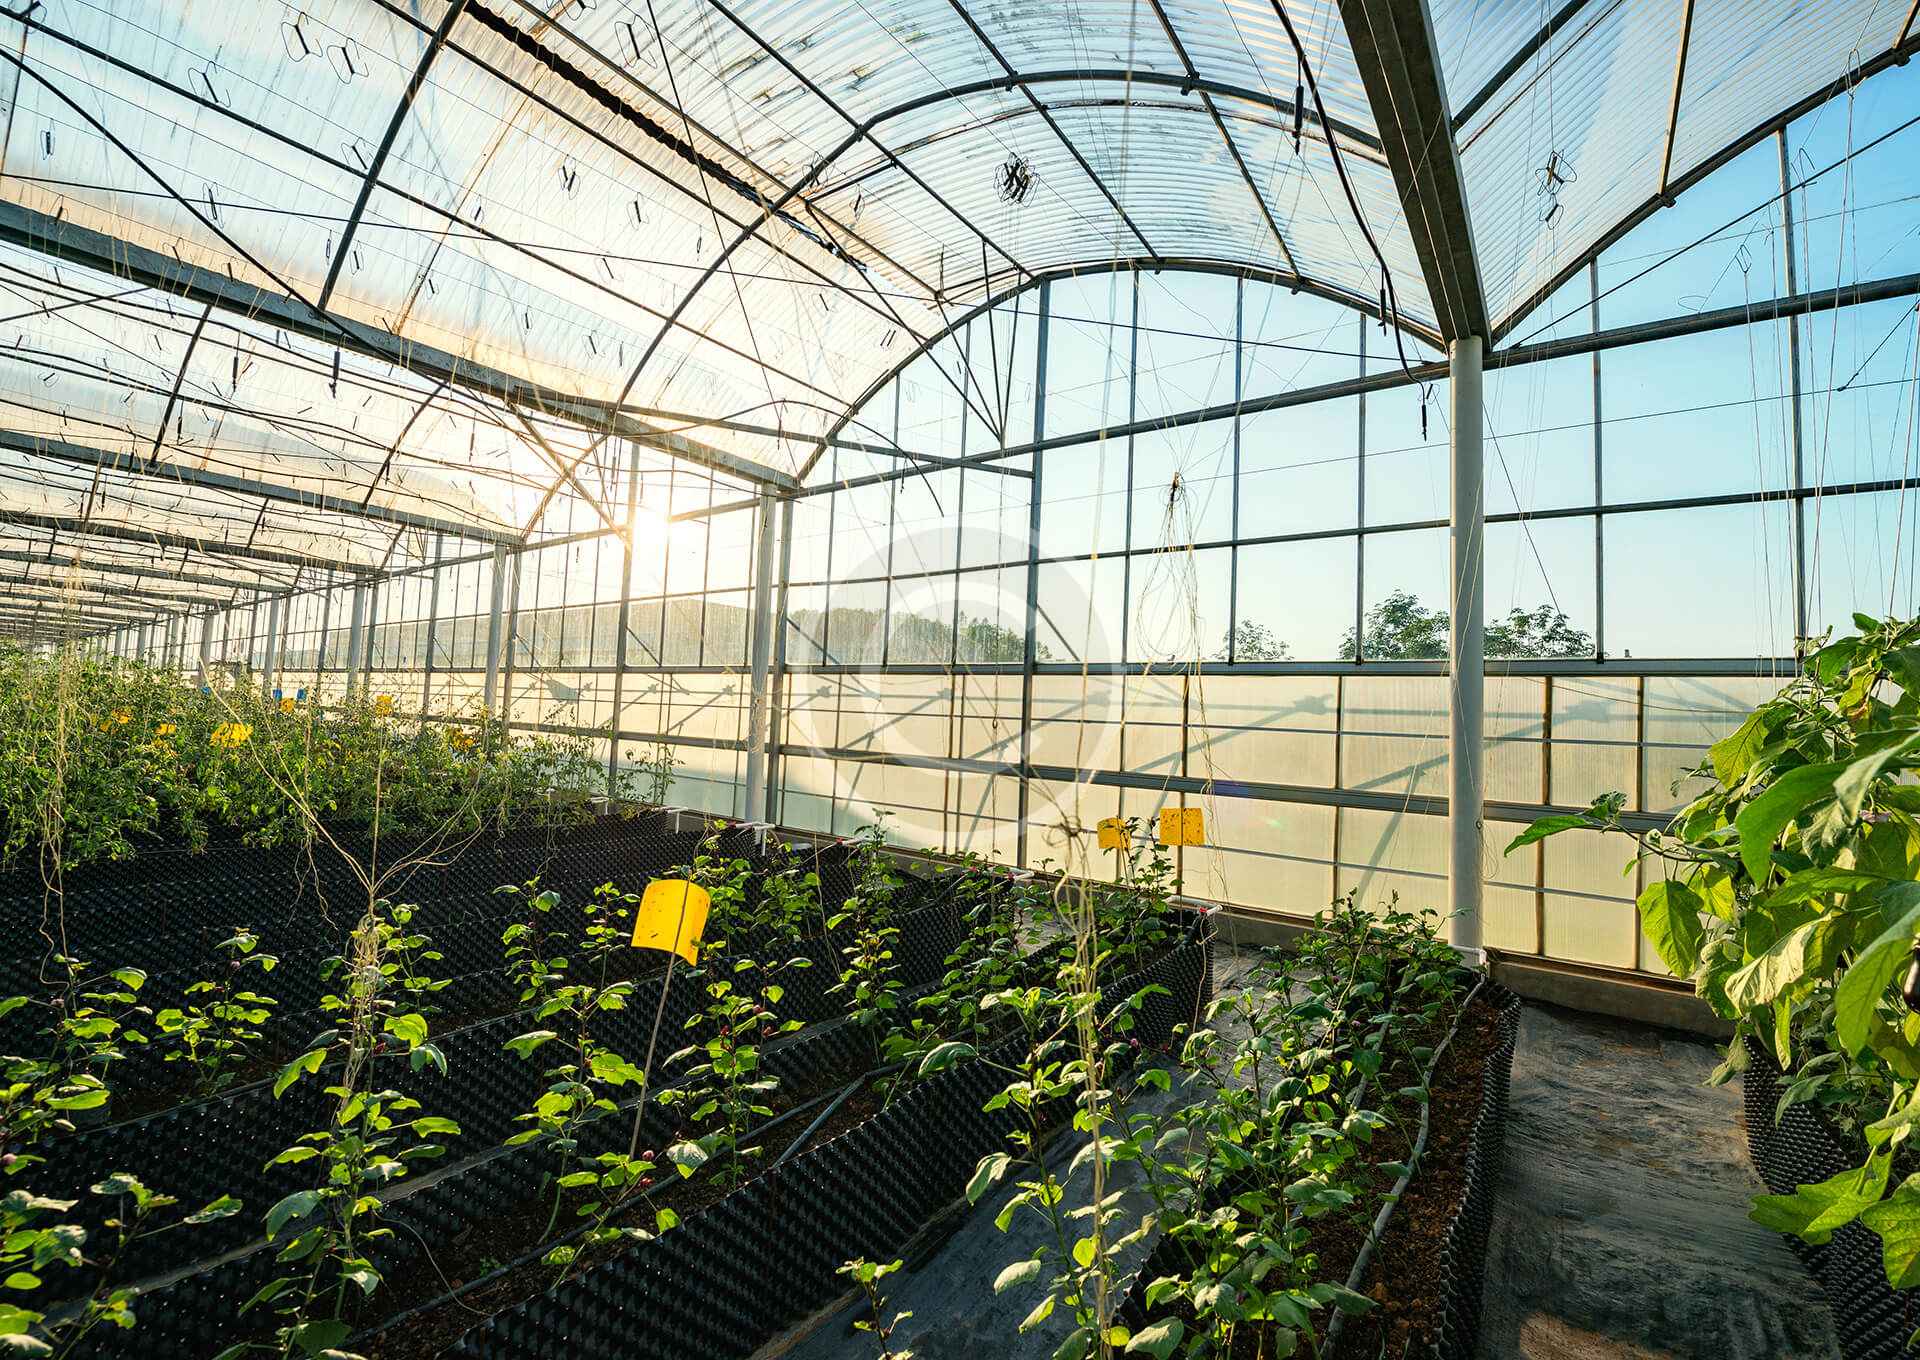 Hydroponic greenhouses